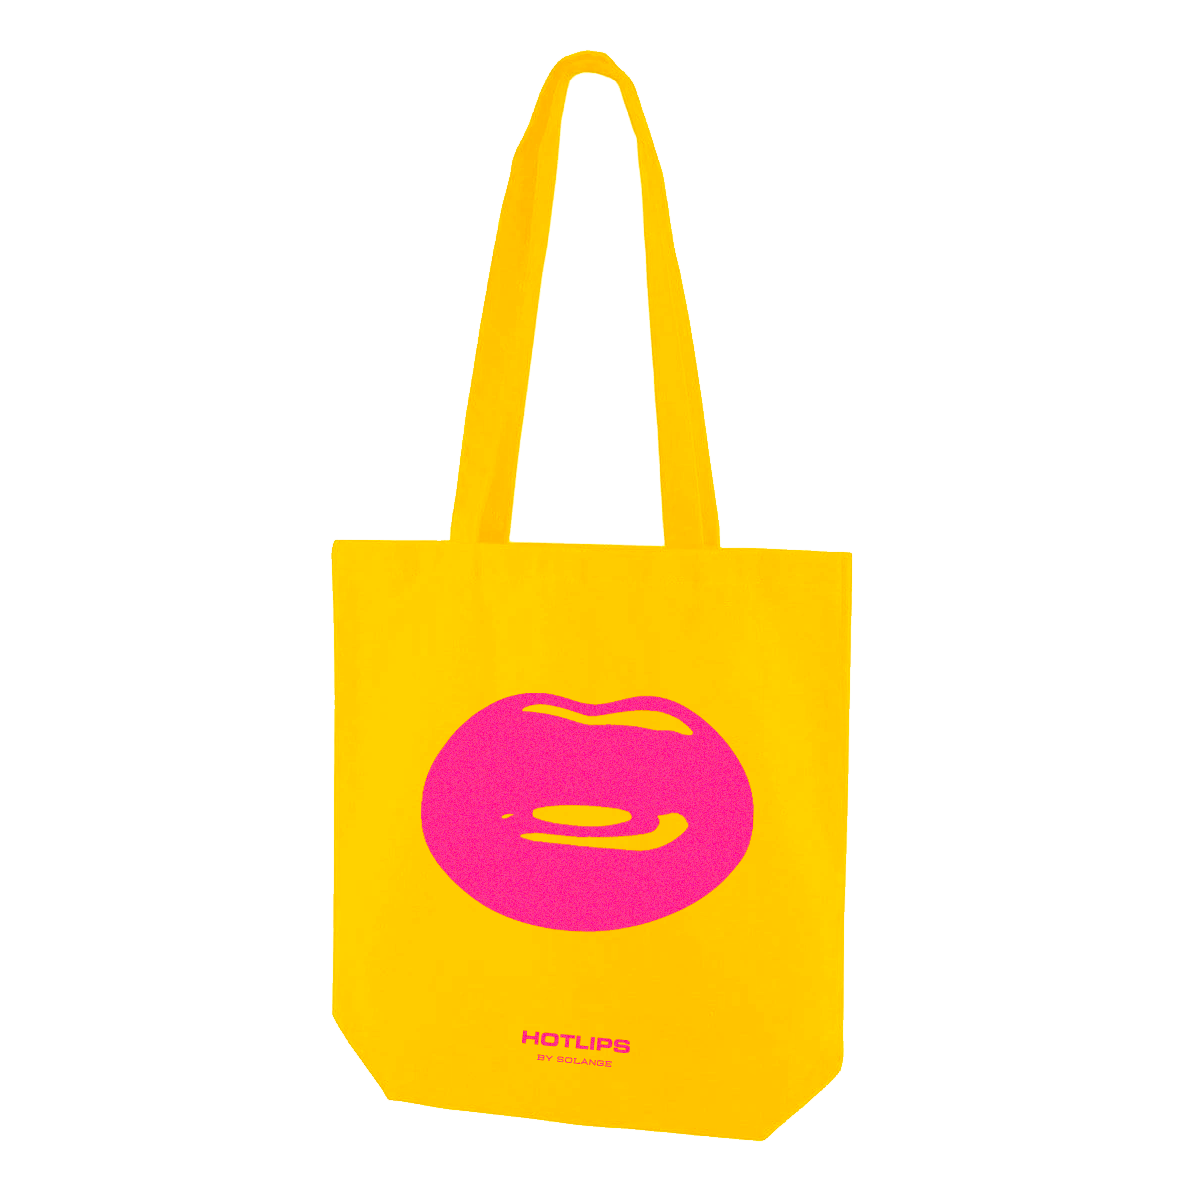 Hotlips tote bag yellow pink lips